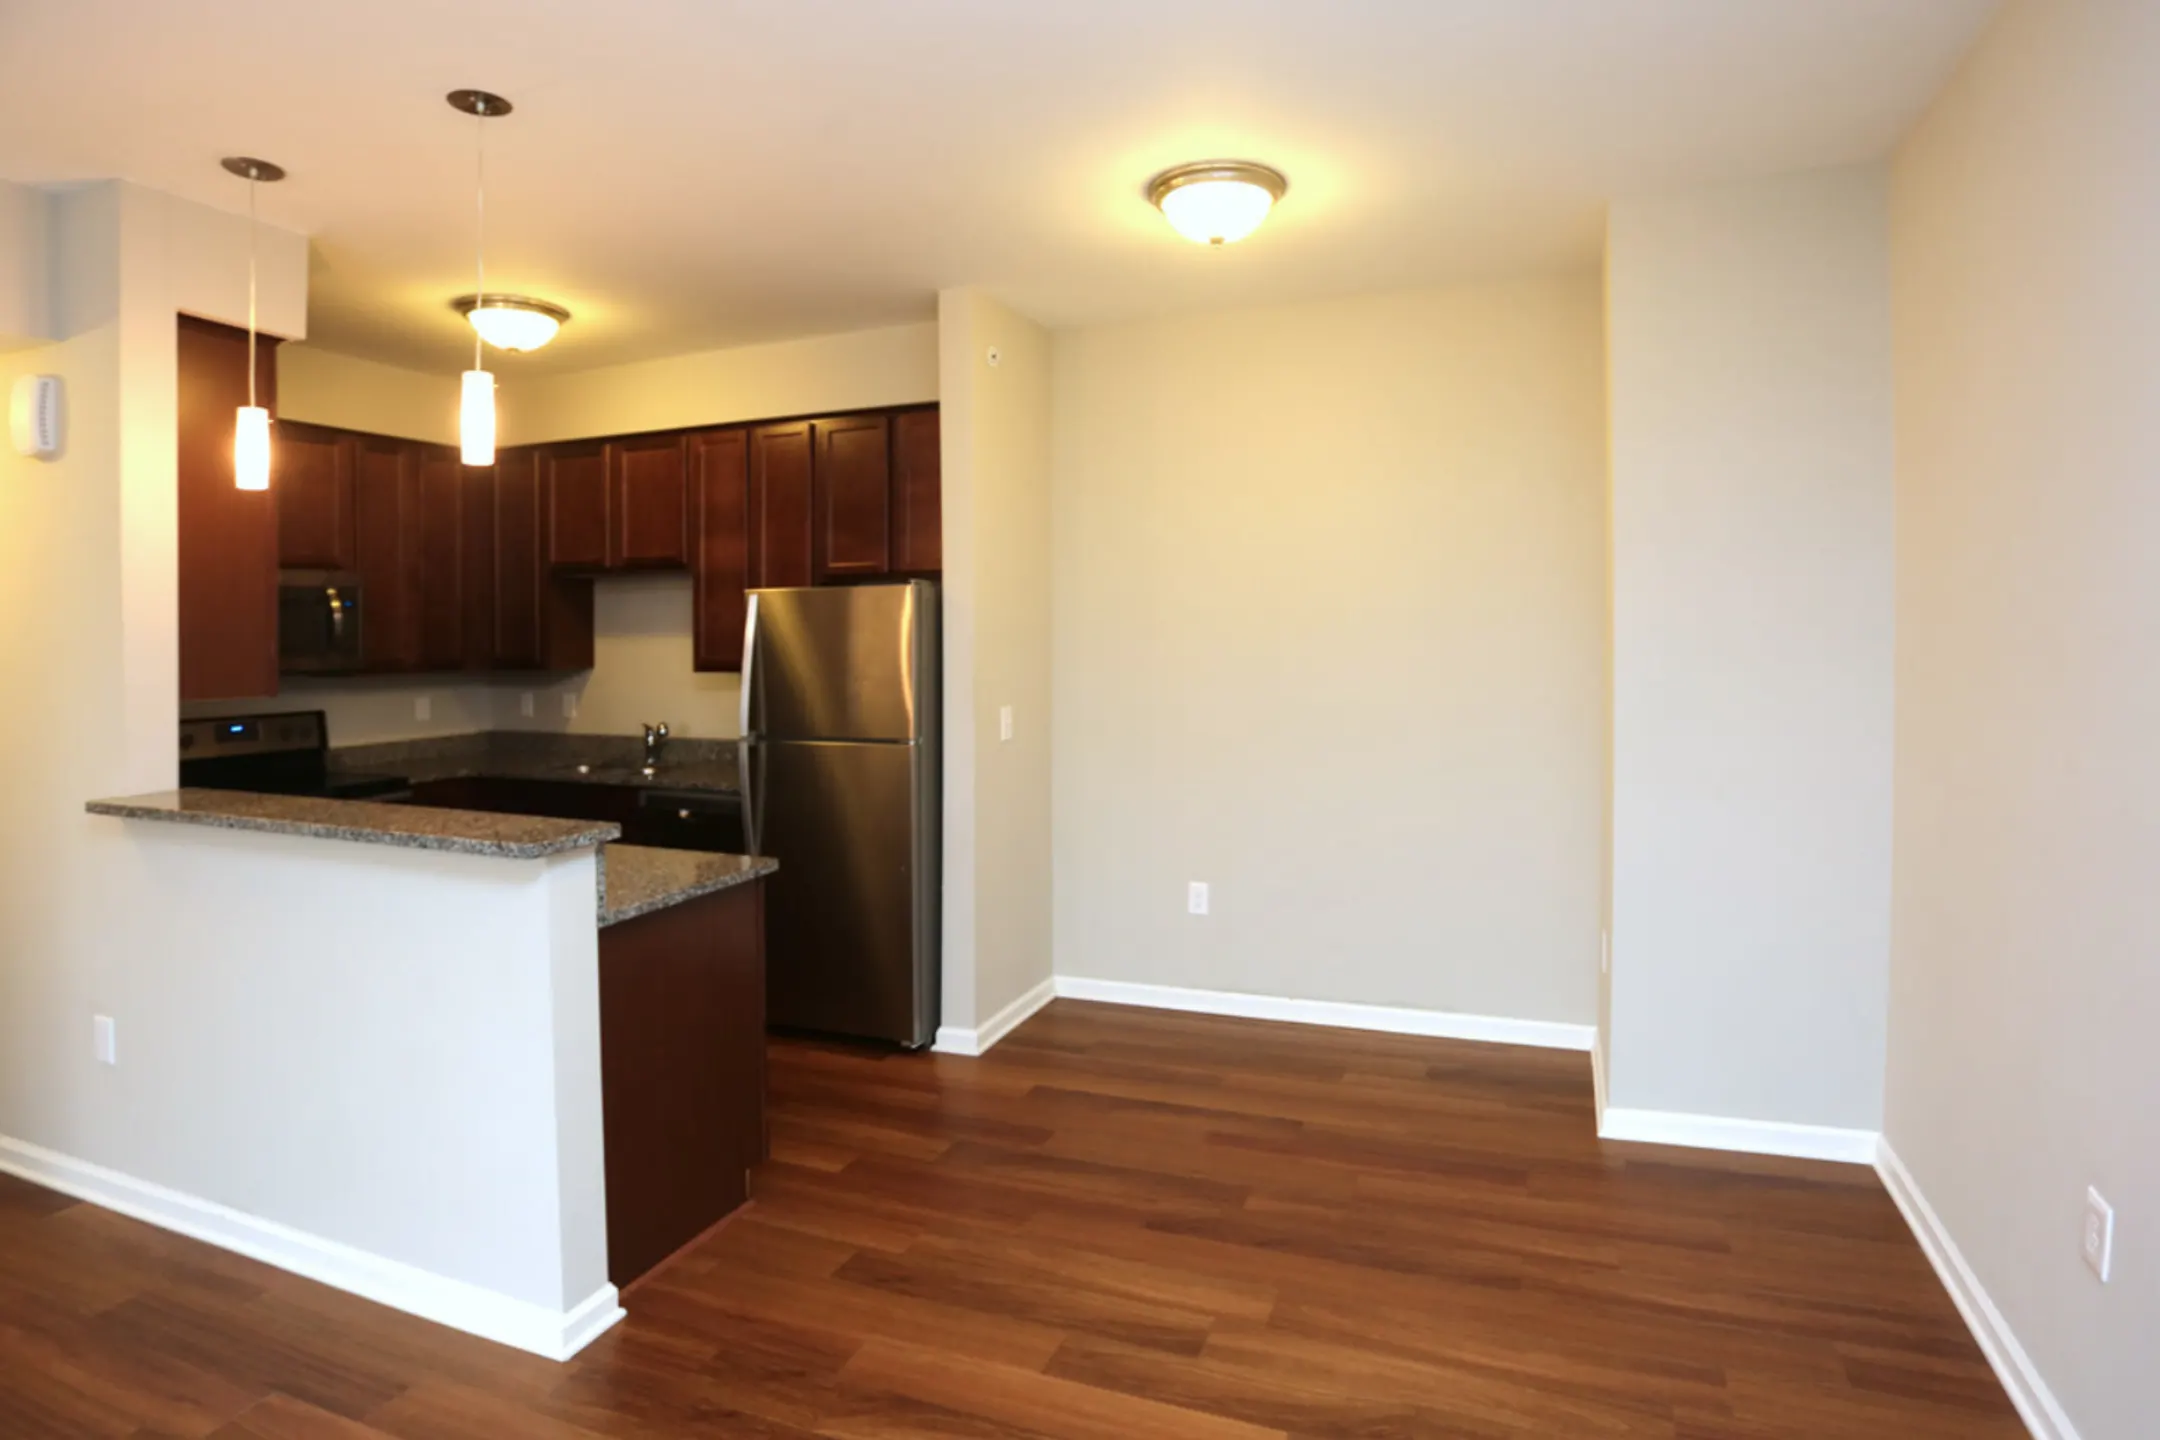 Kitchen - The Aspen Apartments - Roanoke, VA